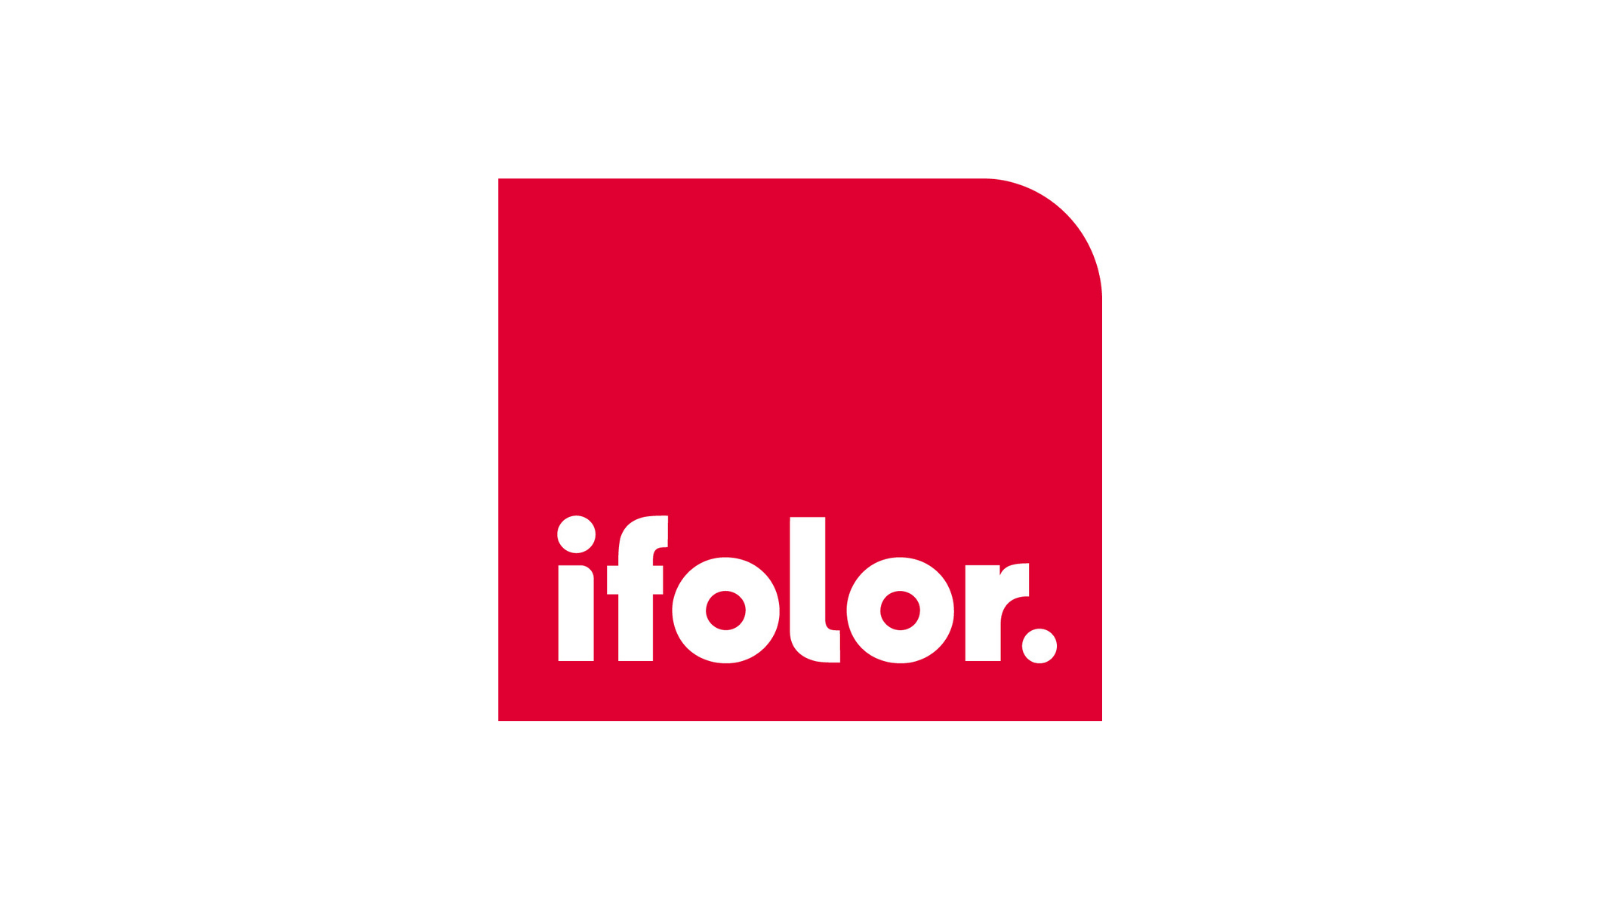 ifolor AG